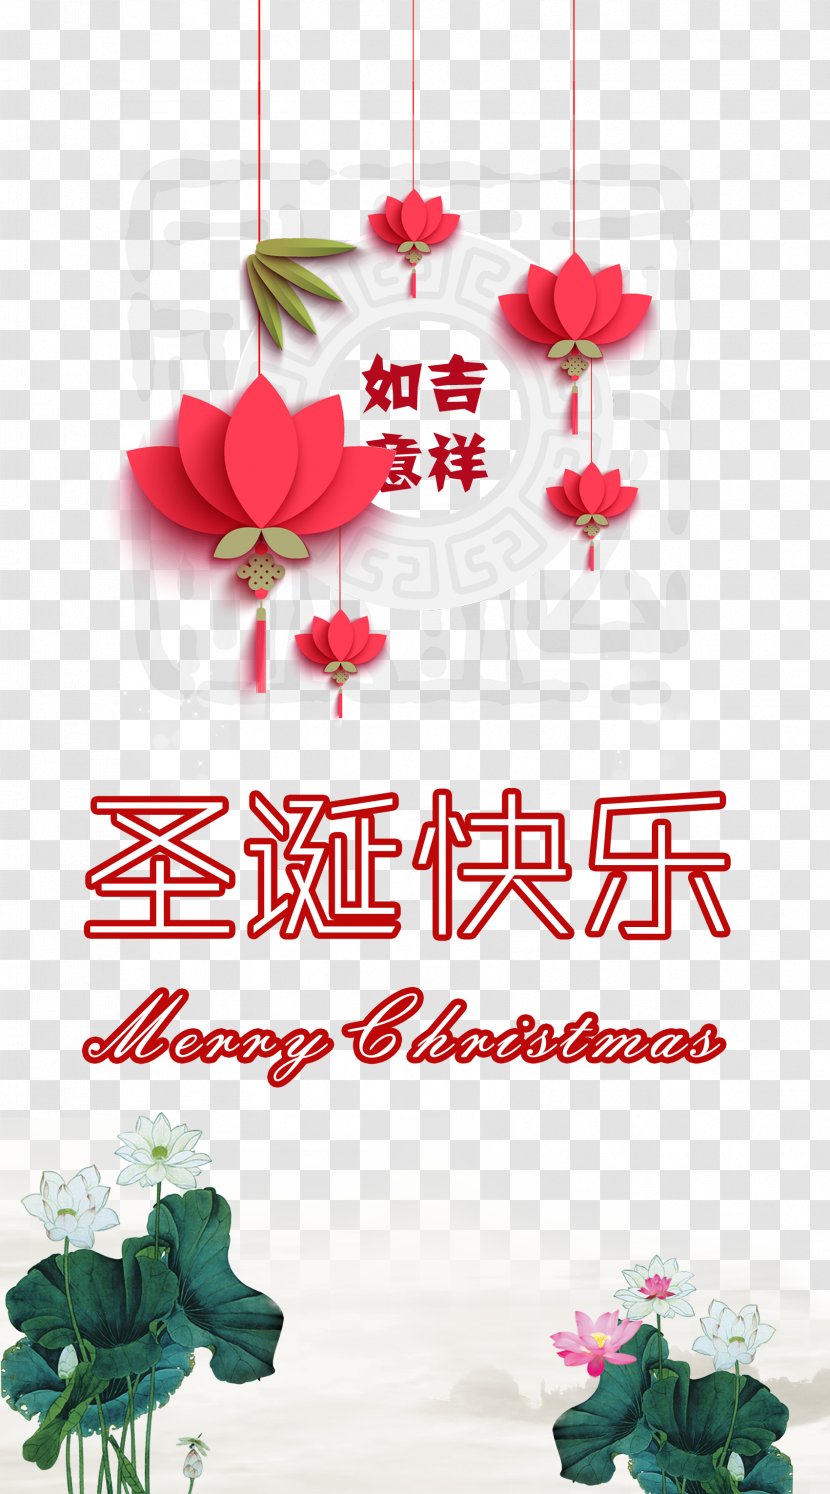 Garden Roses Floral Design Illustration - Christmas Greeting Cards Blessings Creative Transparent PNG